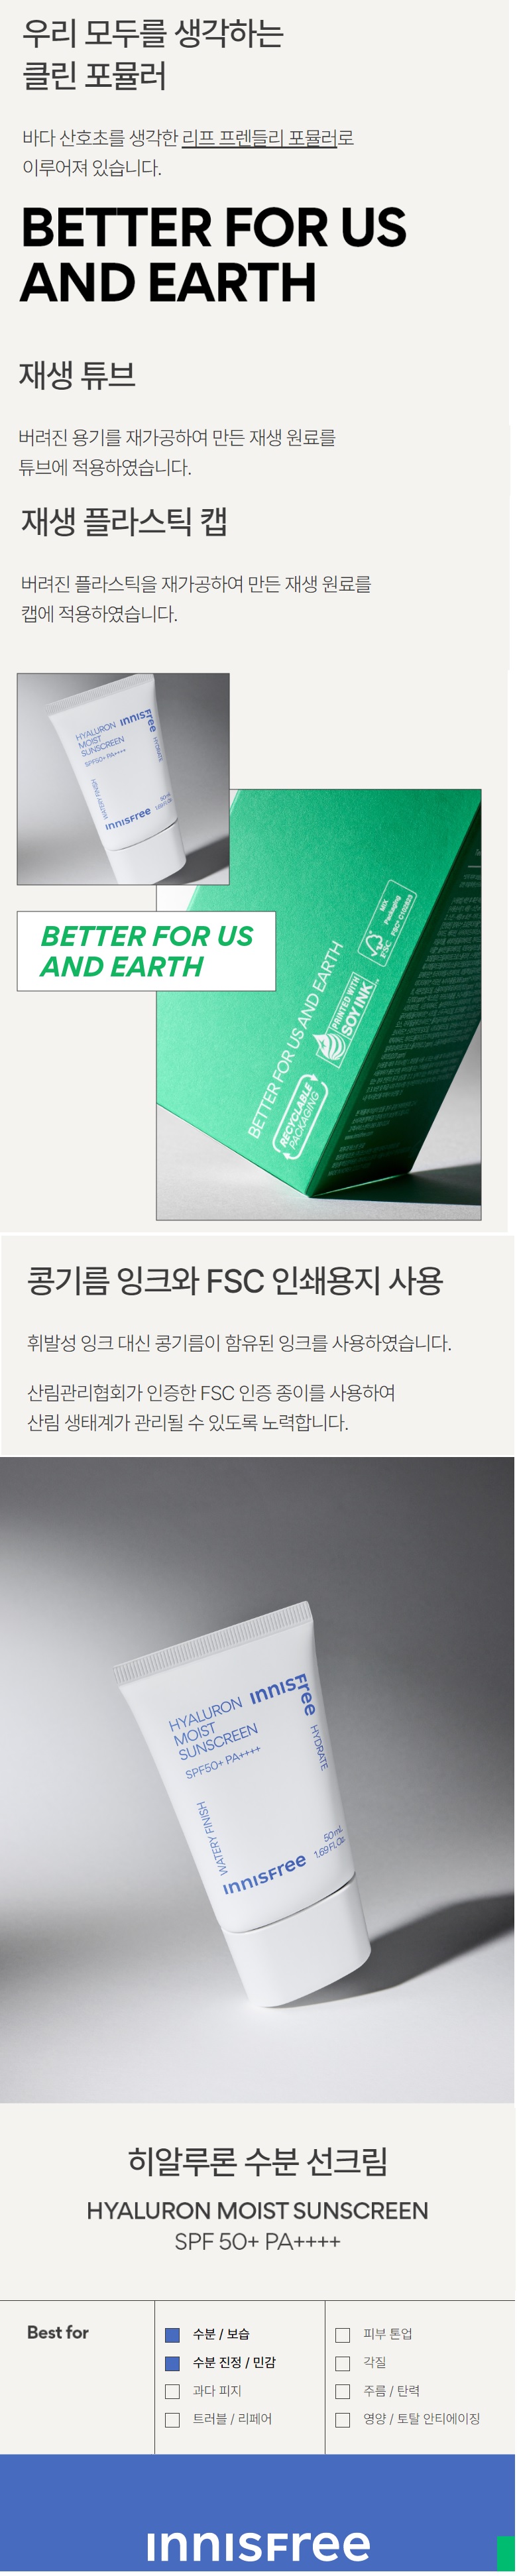 Innisfree Hyaluron Moist Sunscreen korean skincare product online shop malaysia mexico poland2